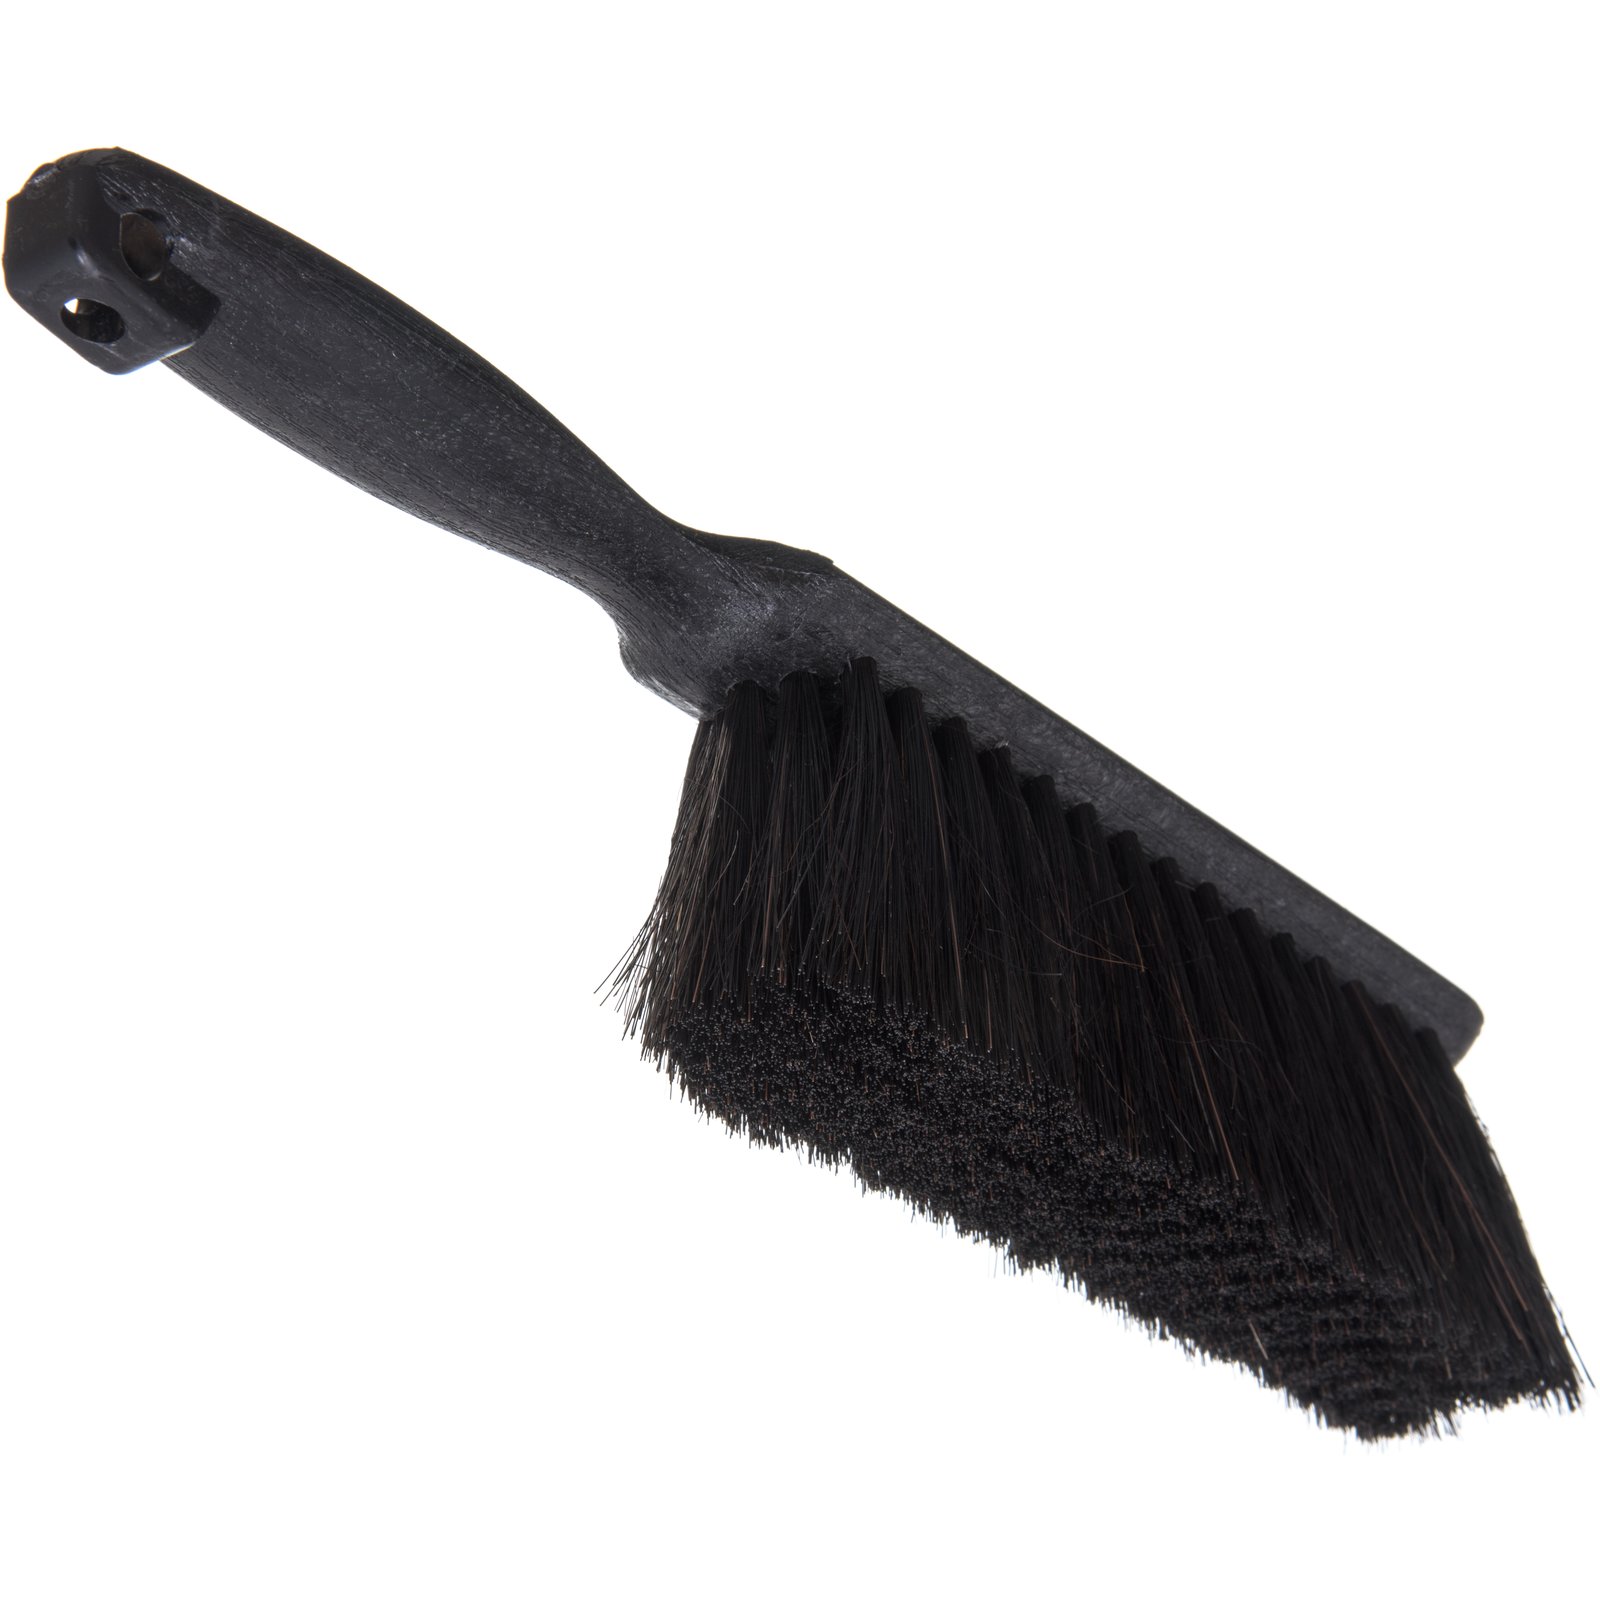 Essendant CFS3622503  Counter/Radiator Brush, Black Horsehair